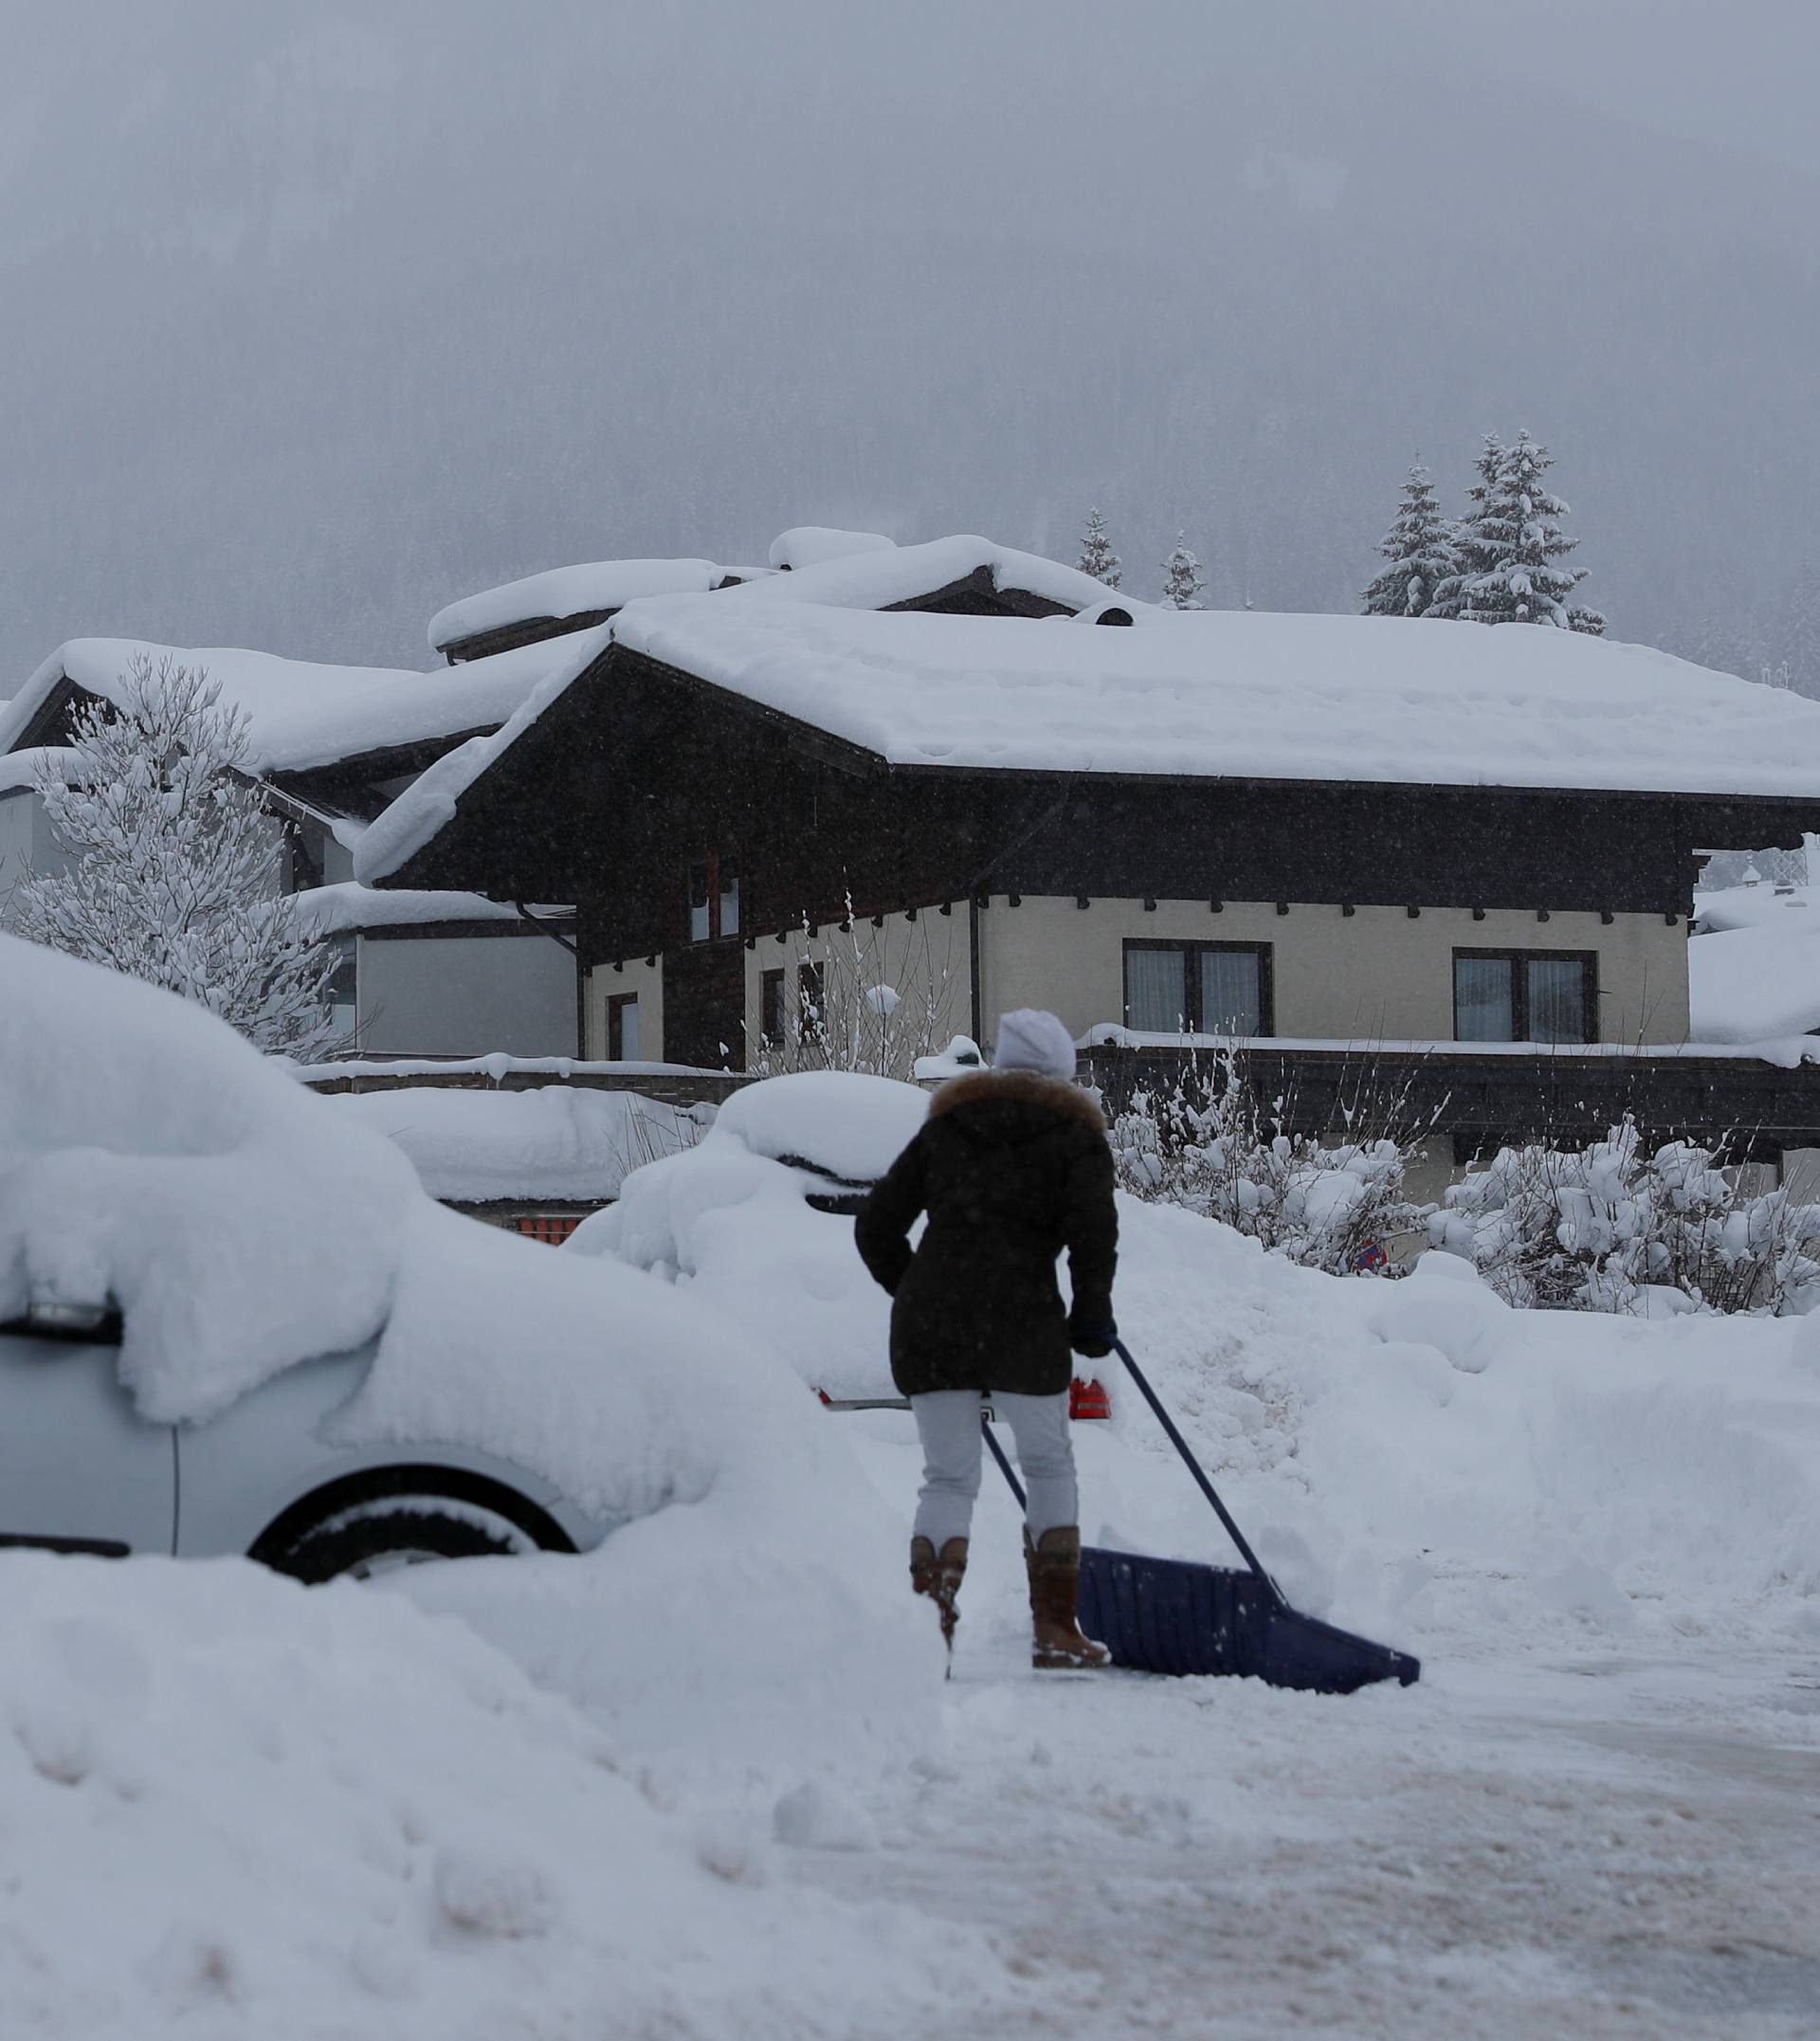 A woman shovels snow on a road after heavy snowfall in Flachau